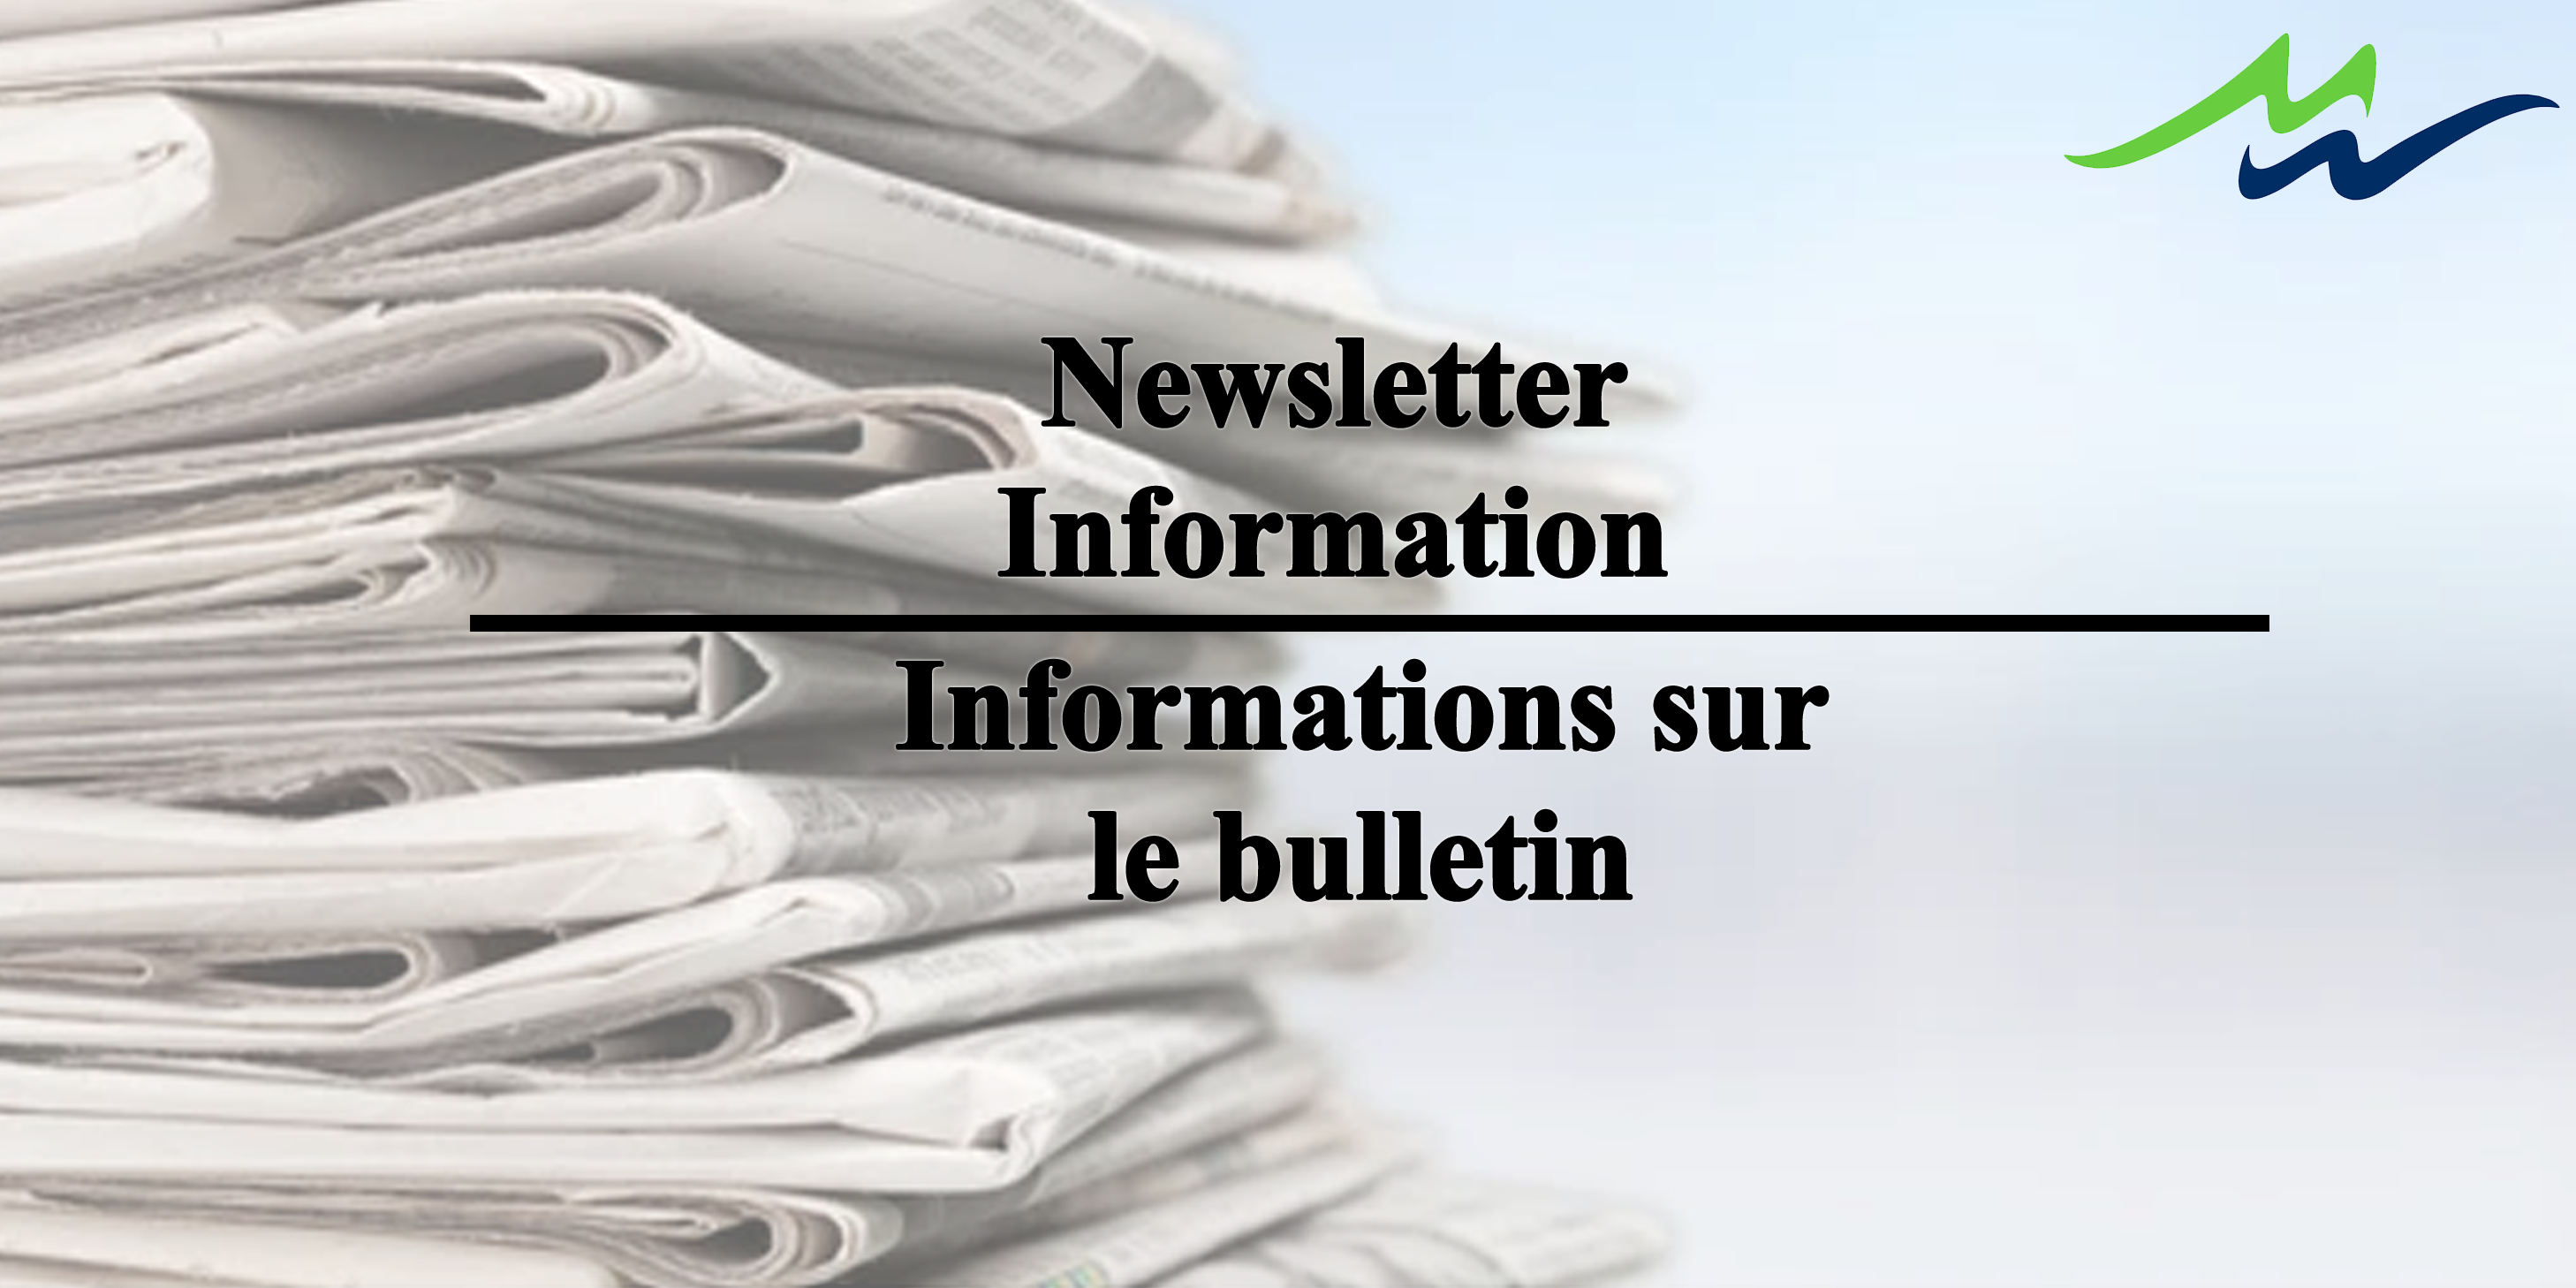 newsletter information